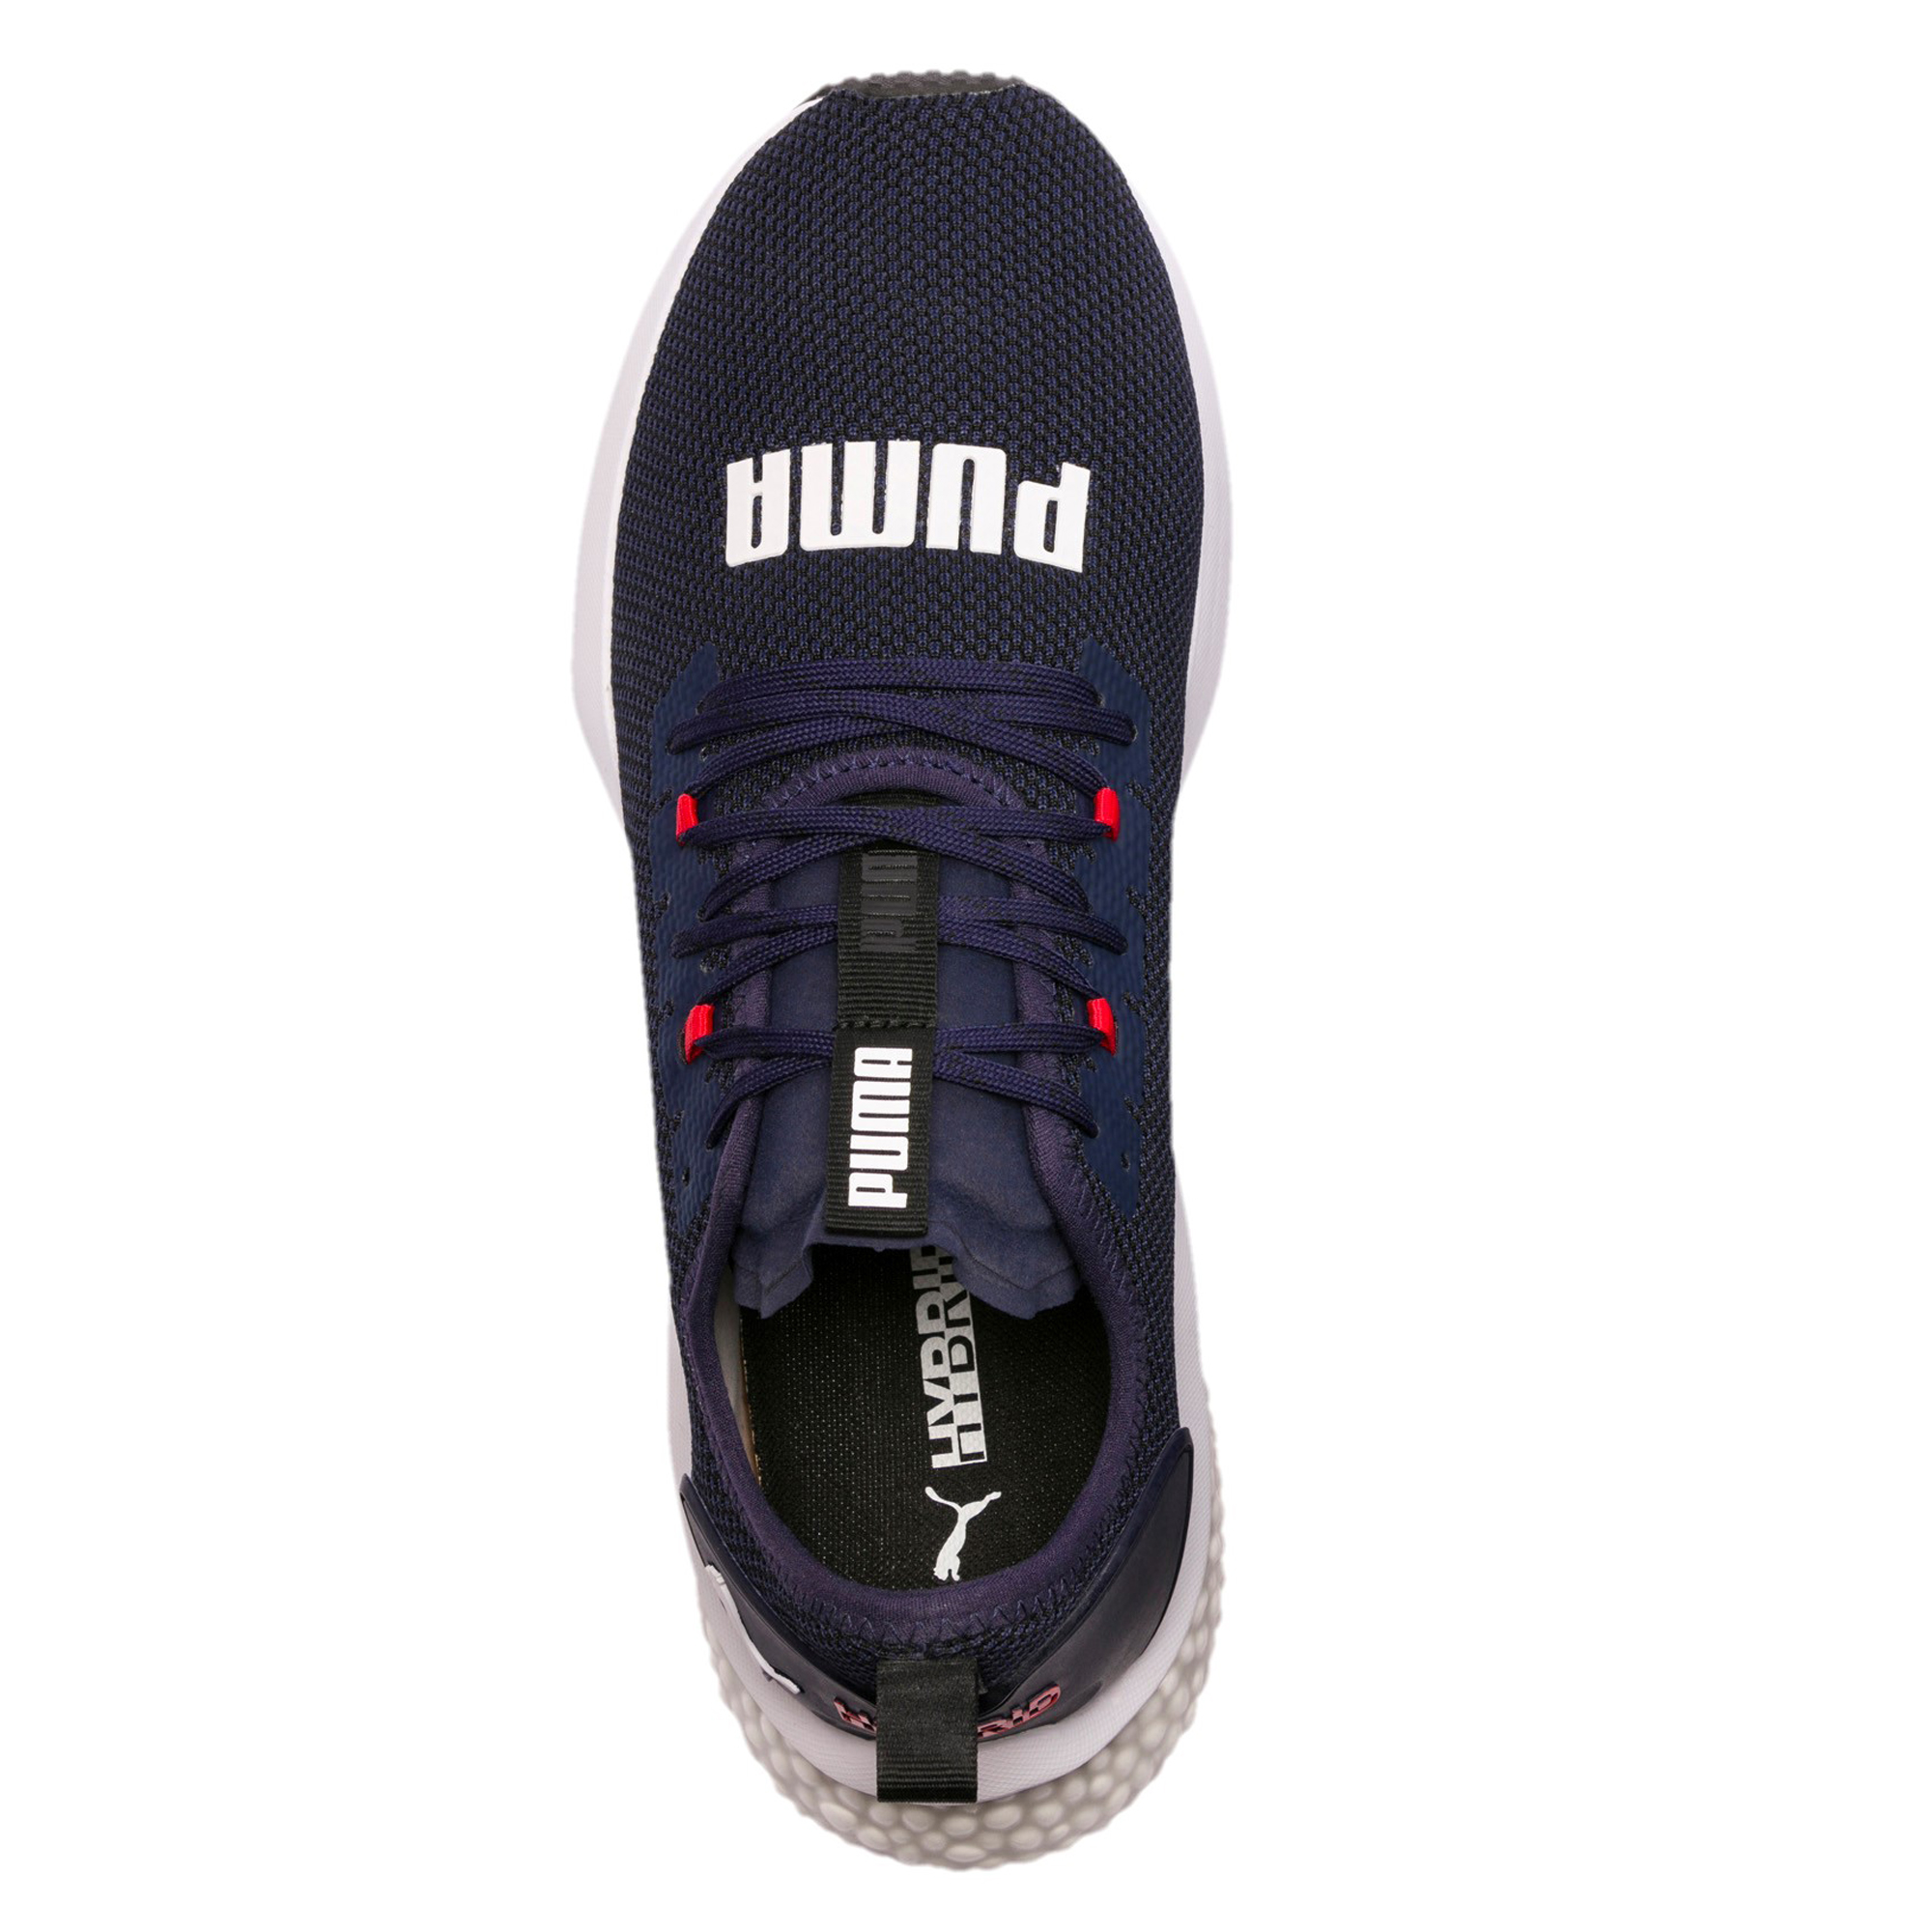 Puma Hybrid NX Herren Laufschuhe Fitnessschuhe Sneaker blau 192259 01